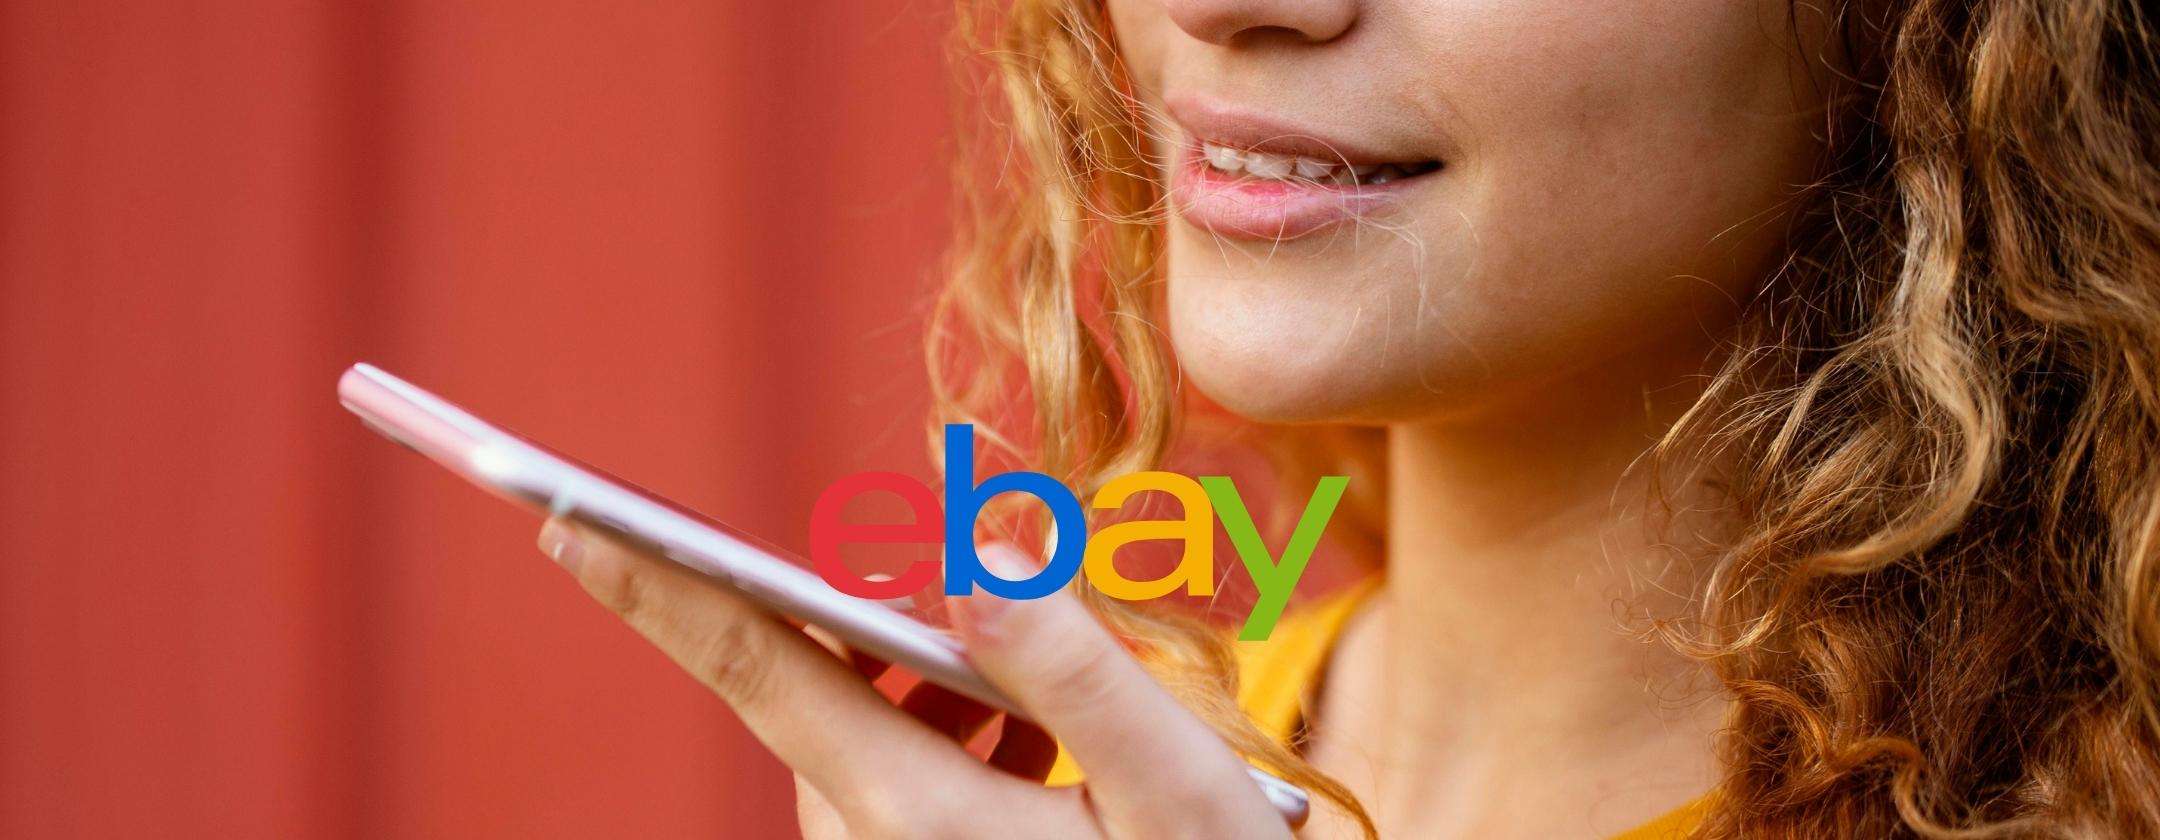 PAZZIA eBay: 2 smartphone sotto i 200€ da comprare assolutamente